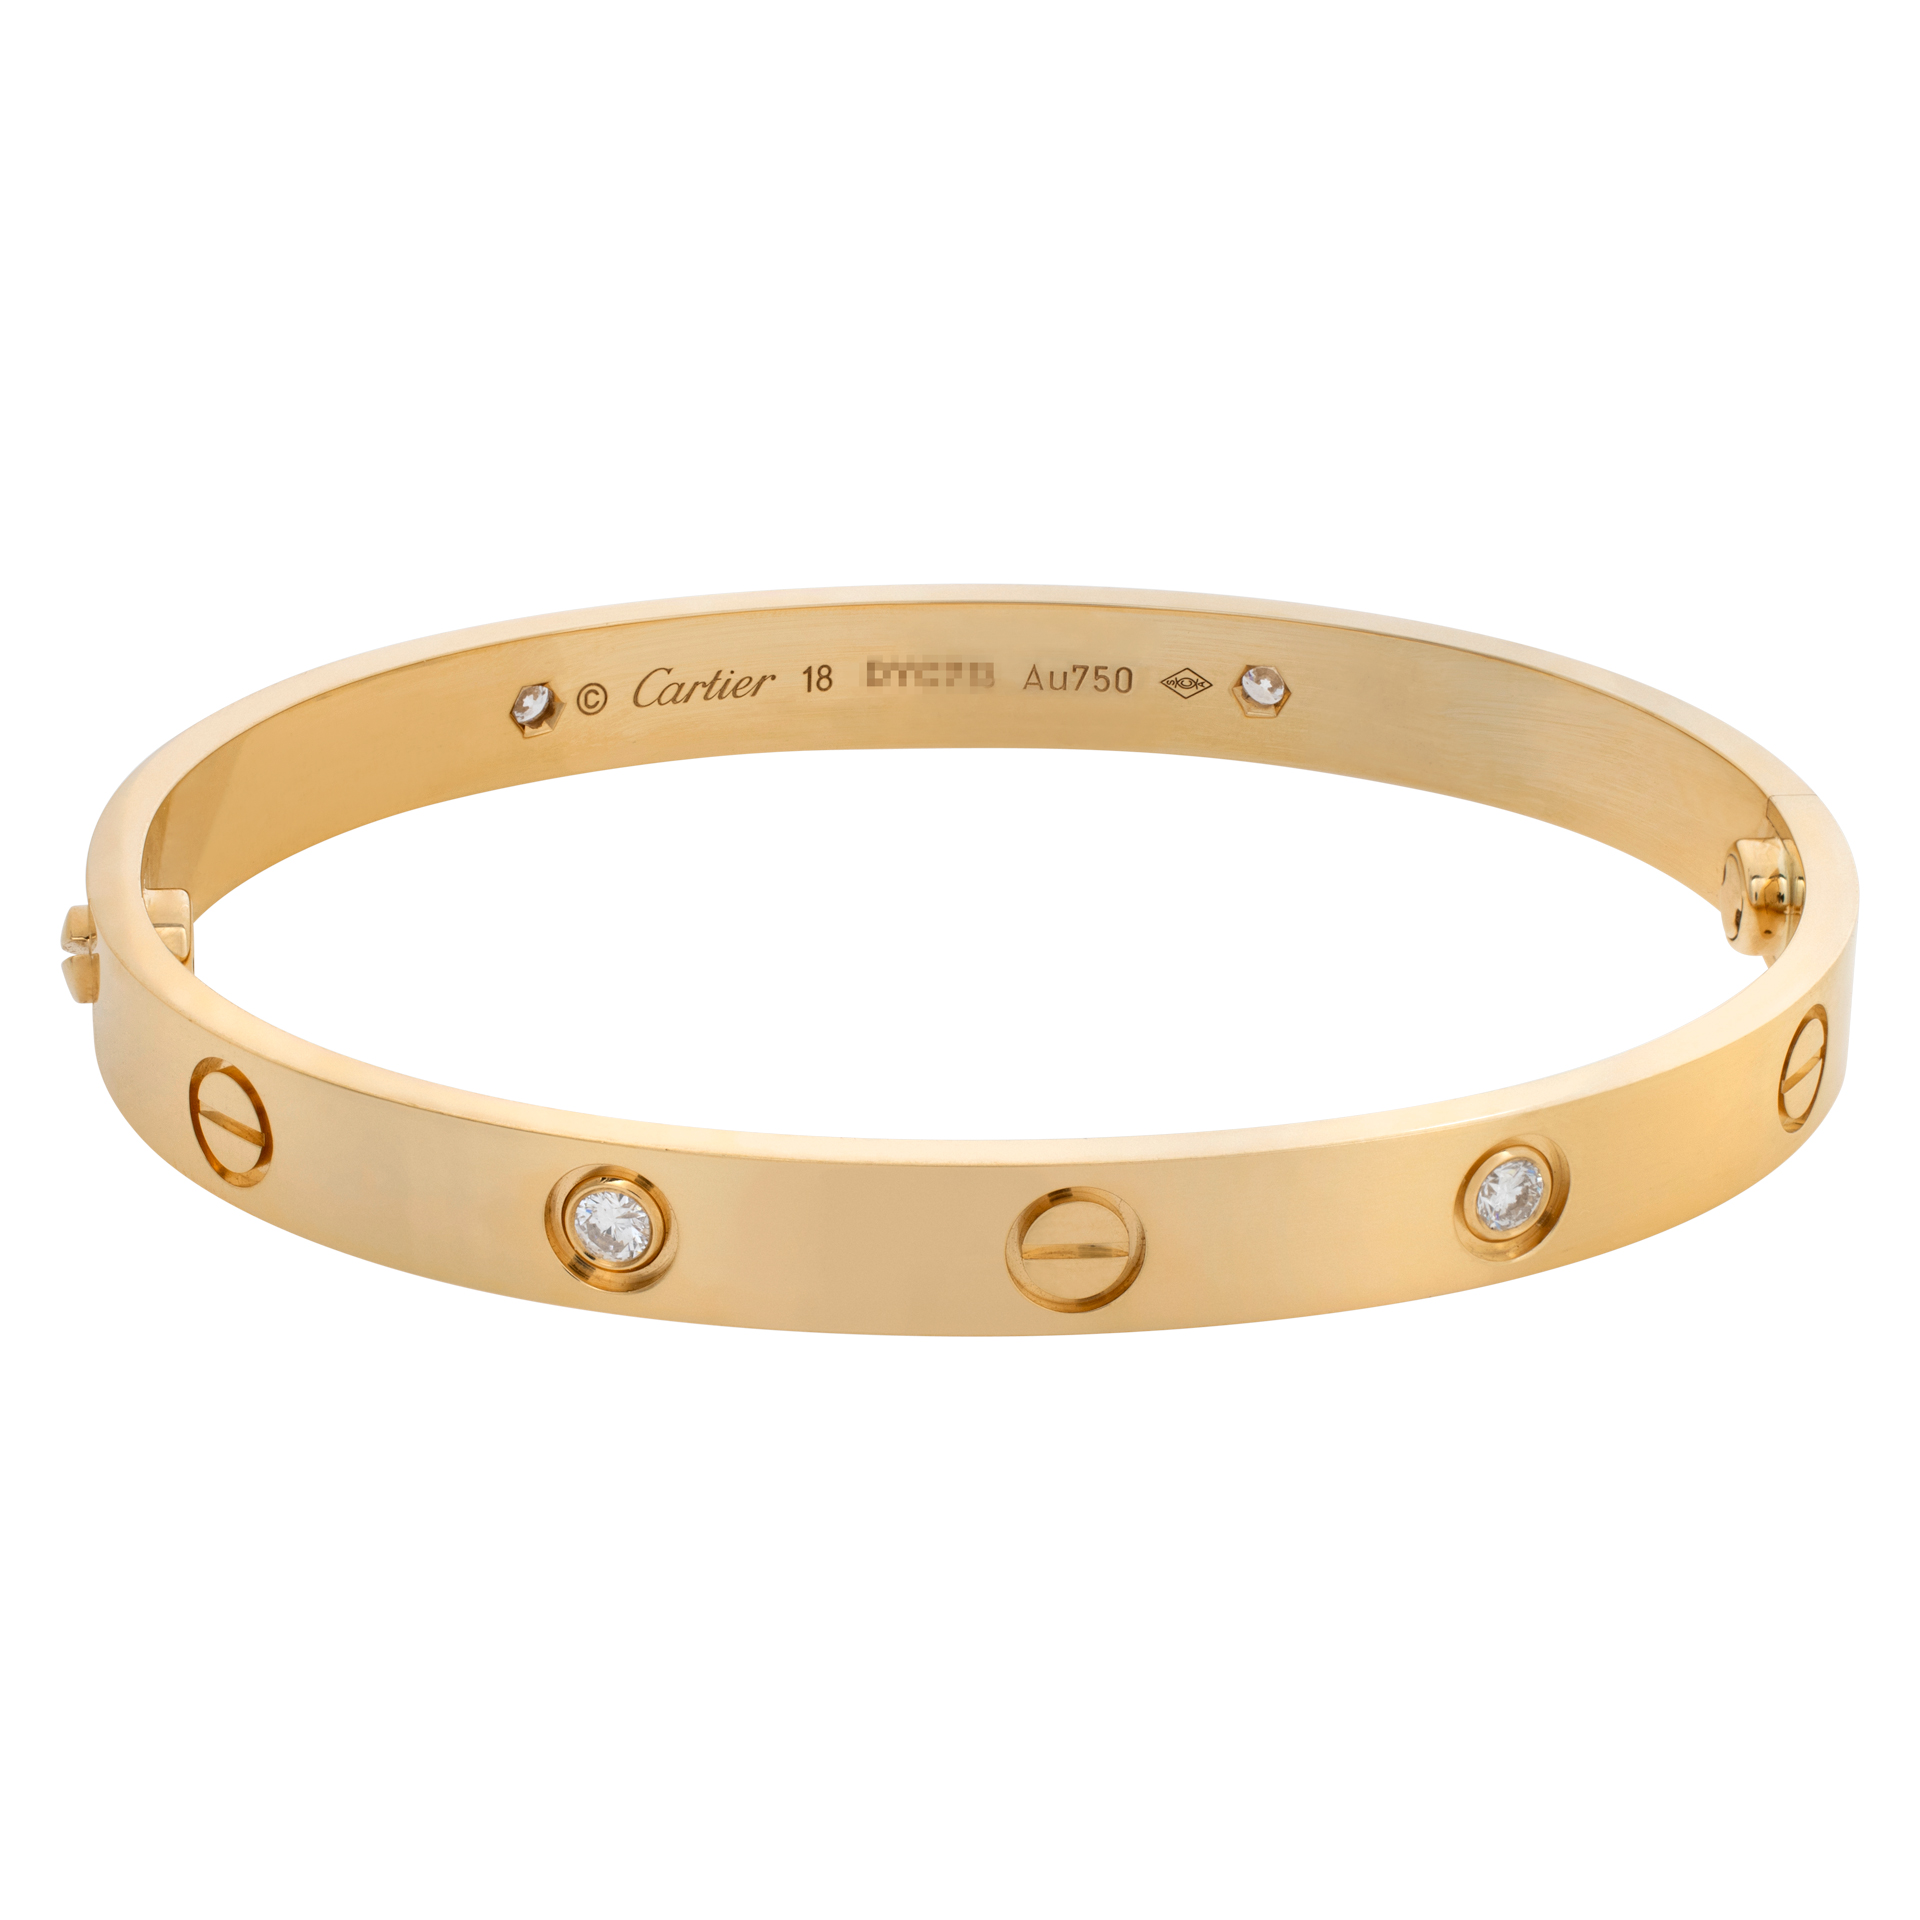 Cartier Love bracelet 18k yellow gold with 4 diamonds image 1